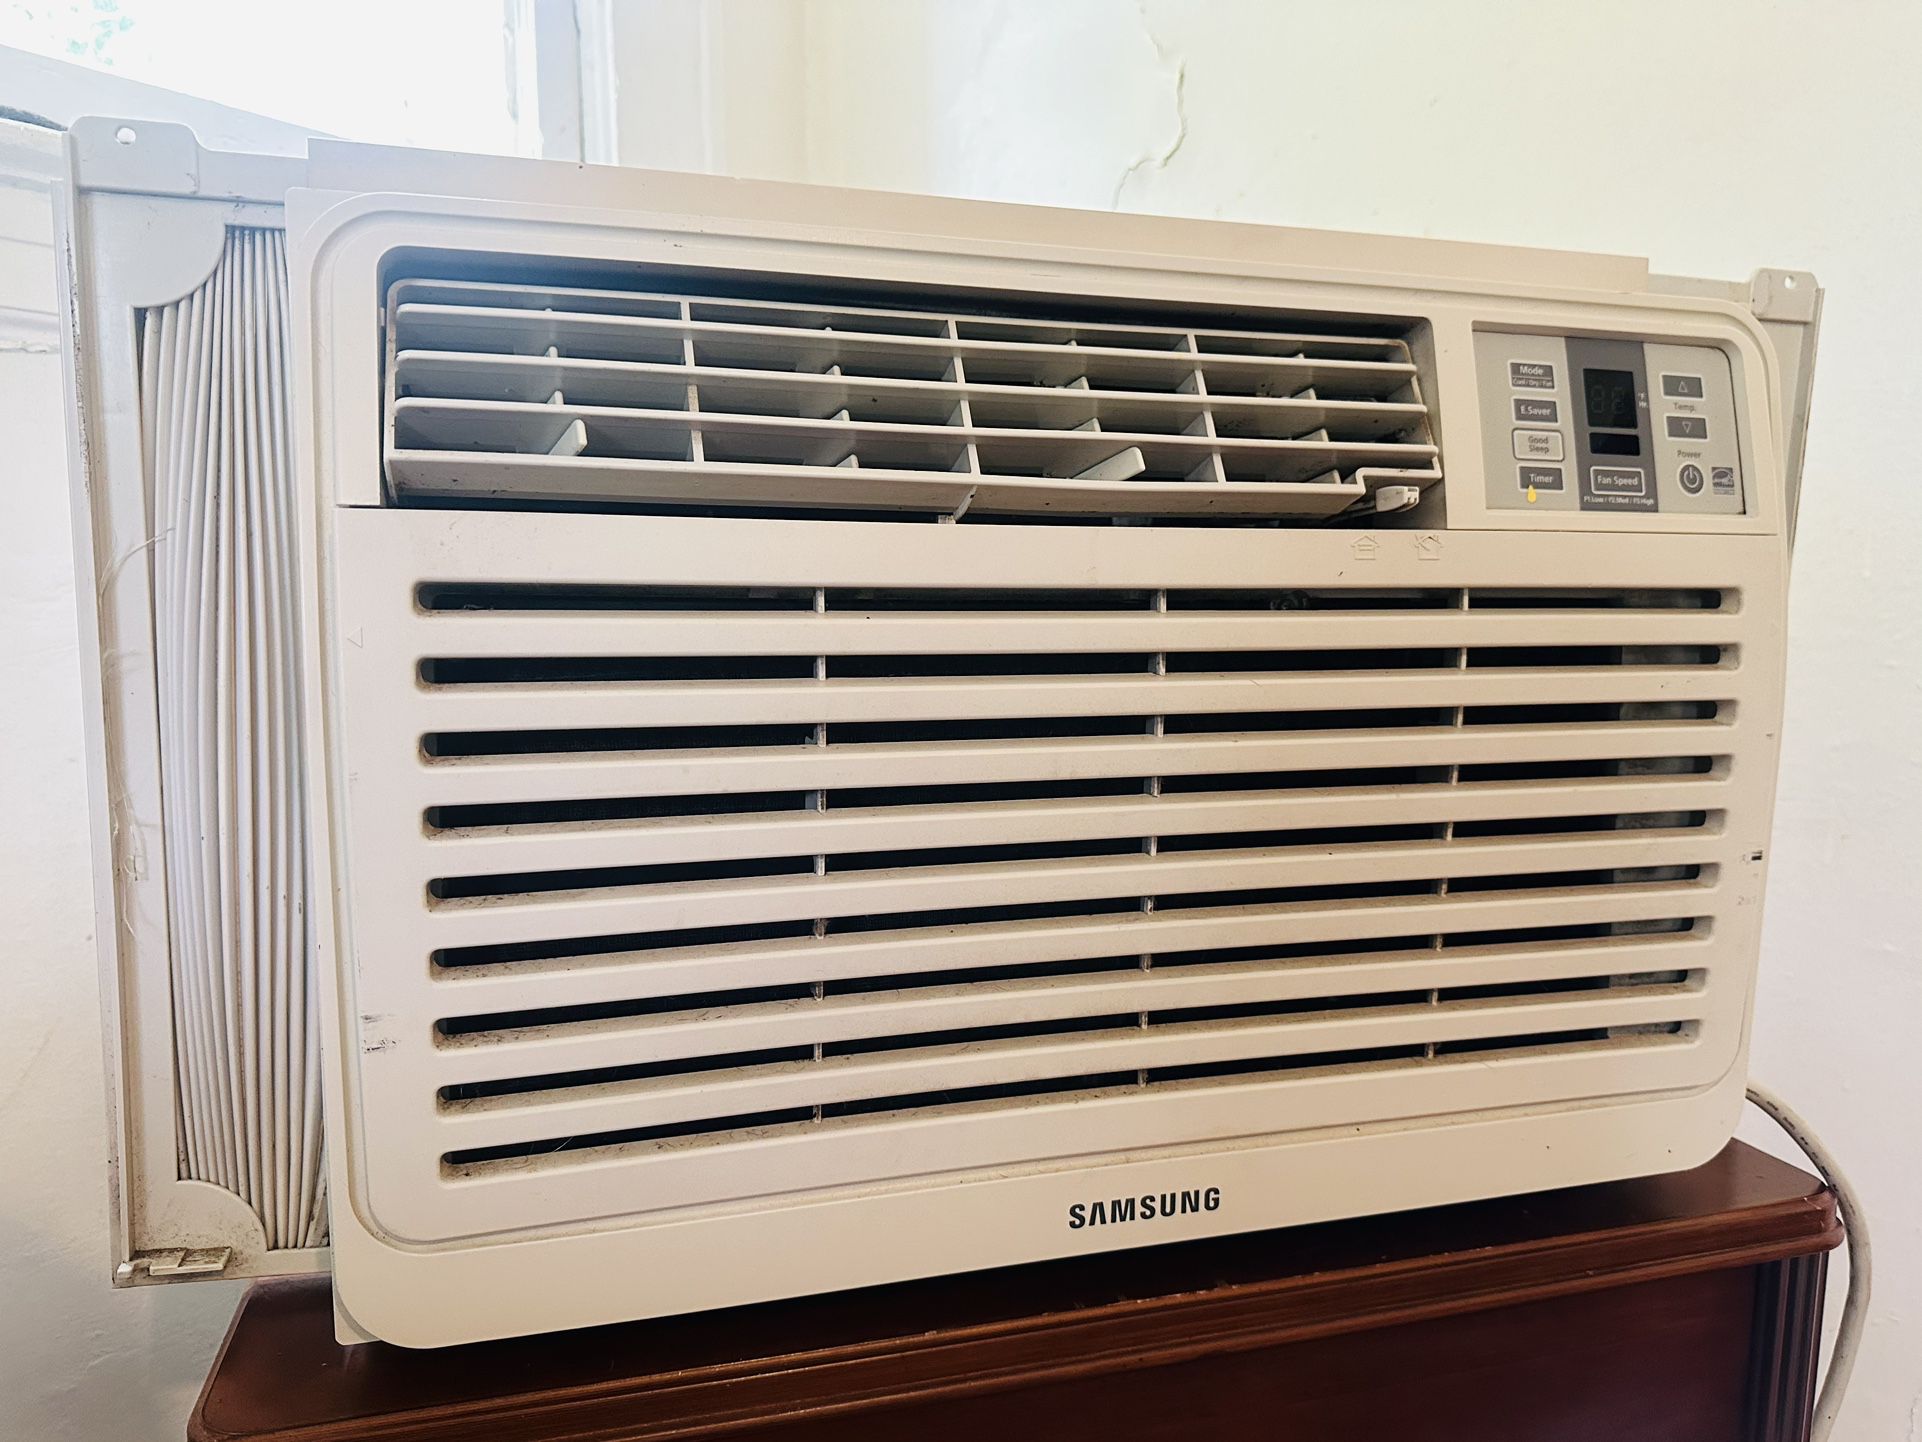 Samsung Air Conditioner AW10ECB8 (10500 BTU!) (Also have Frigidare Air Conditioner!)